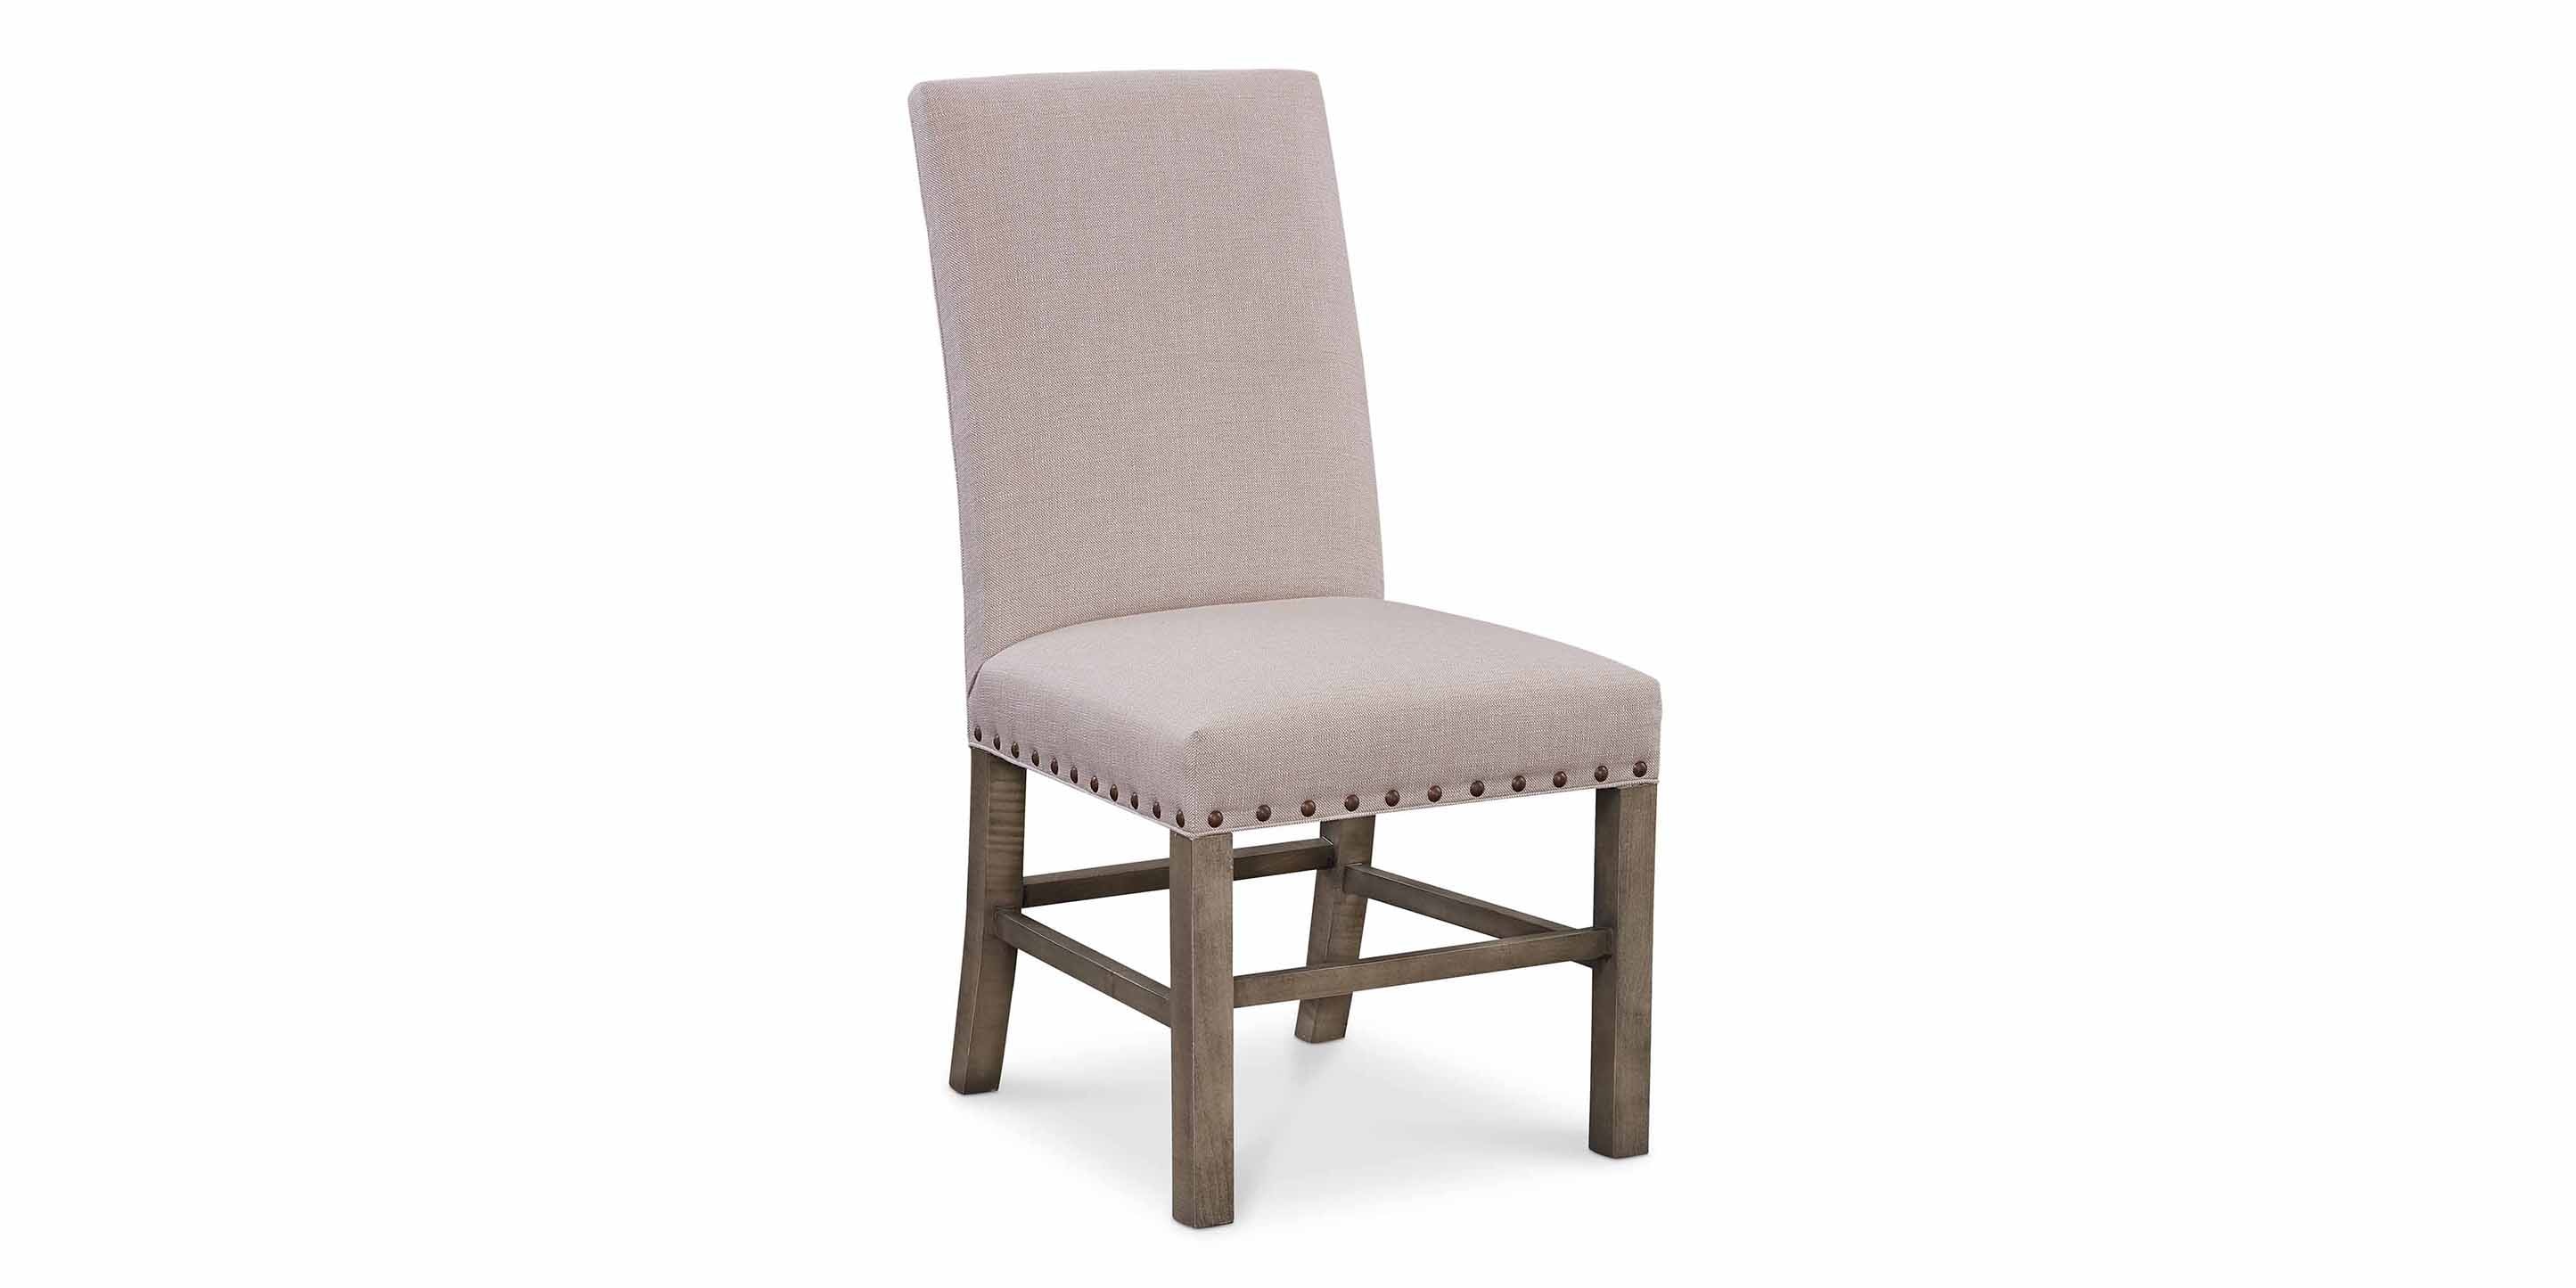 Aiken Upholstered Dining Chair